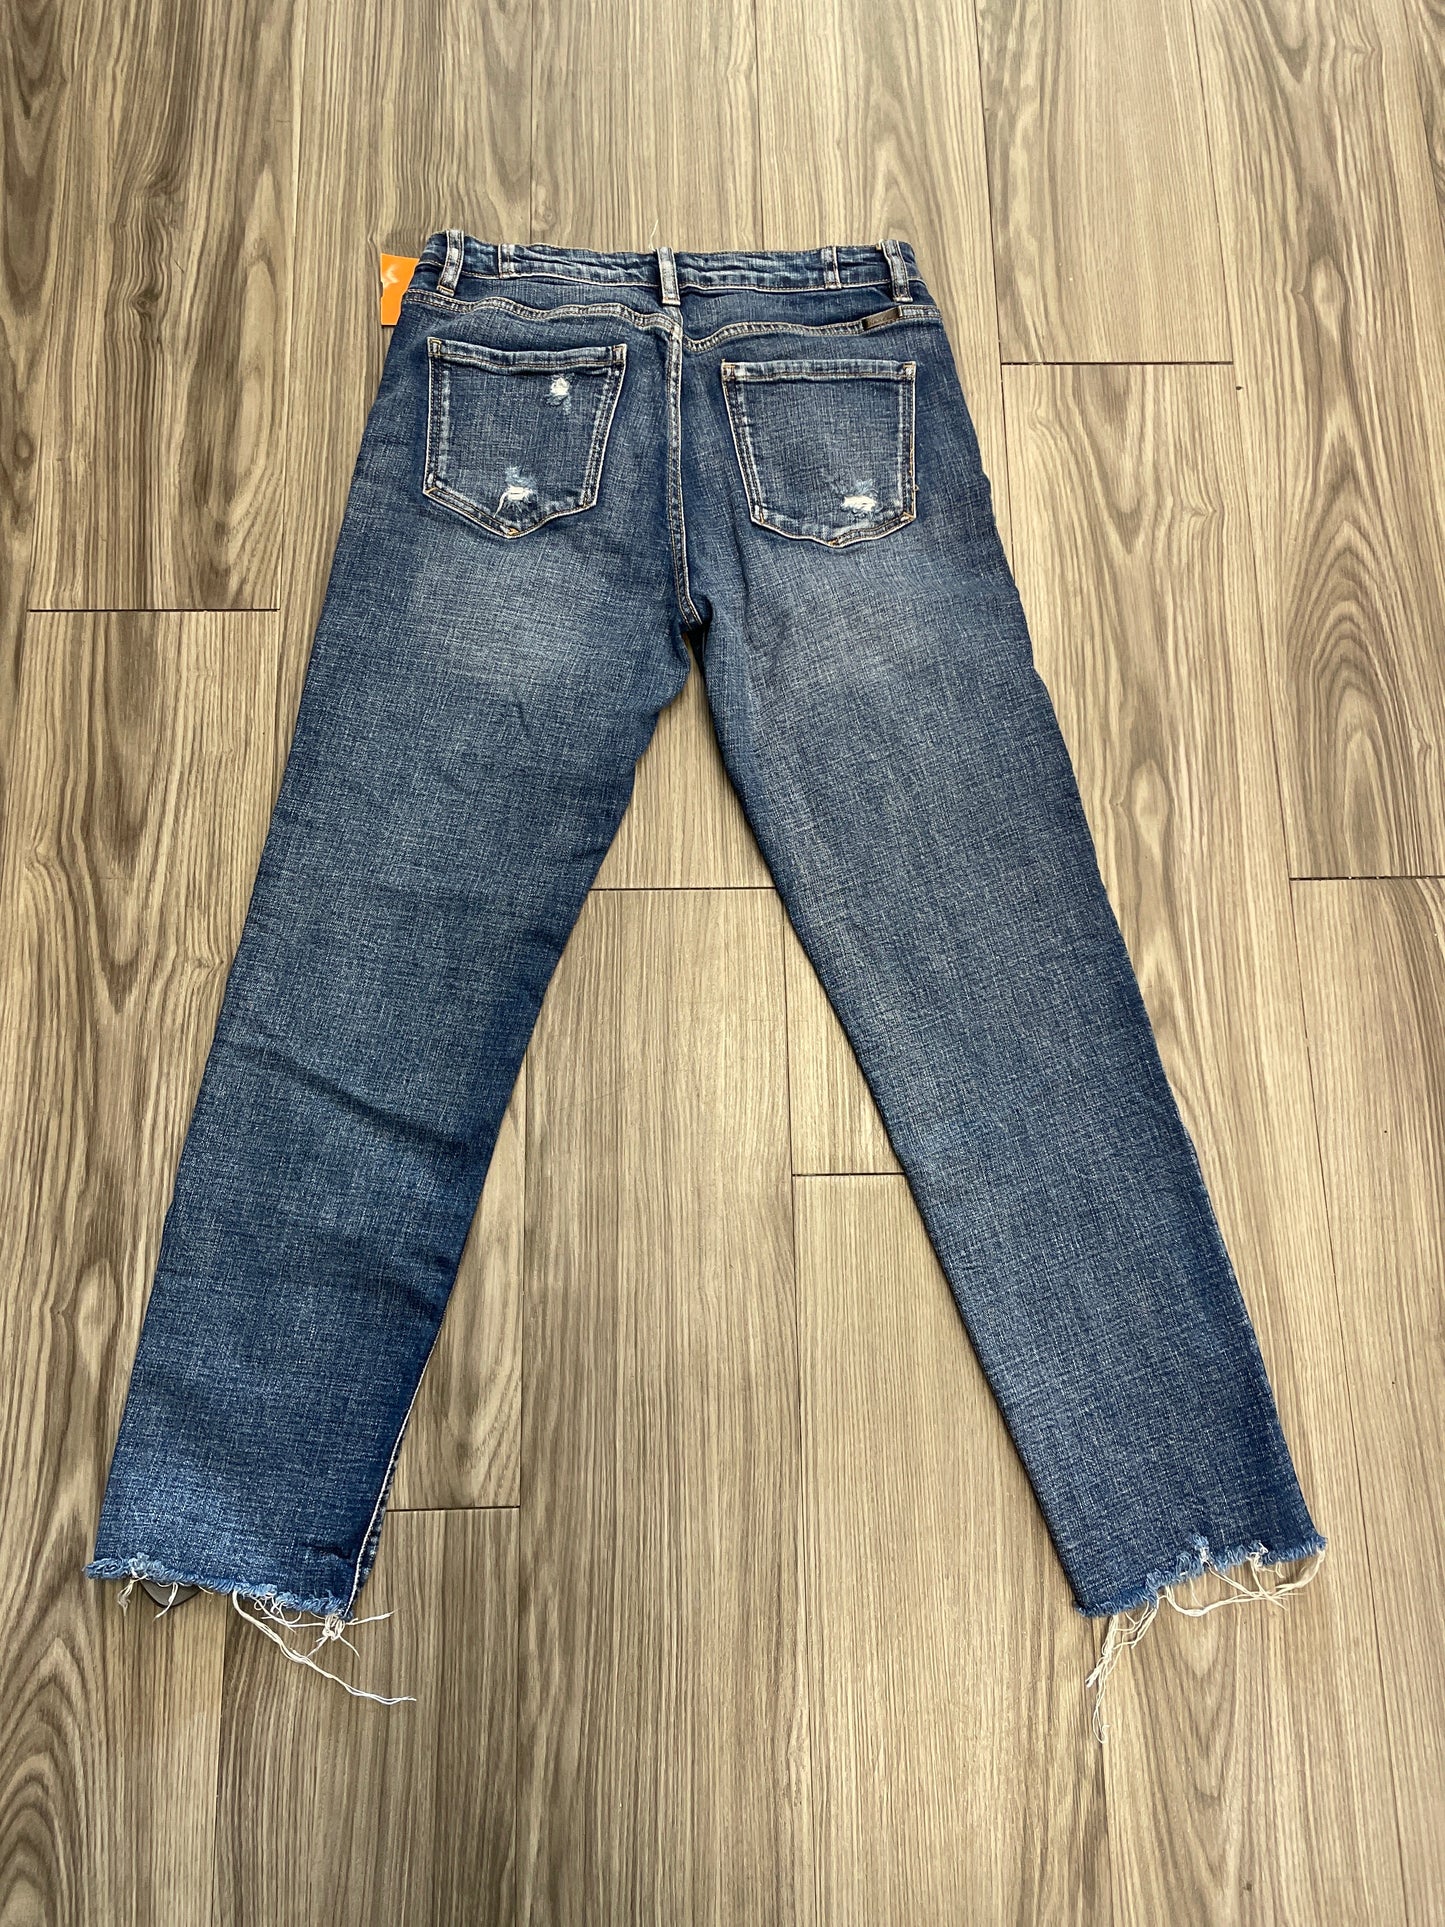 Jeans Boyfriend By Kancan  Size: 8